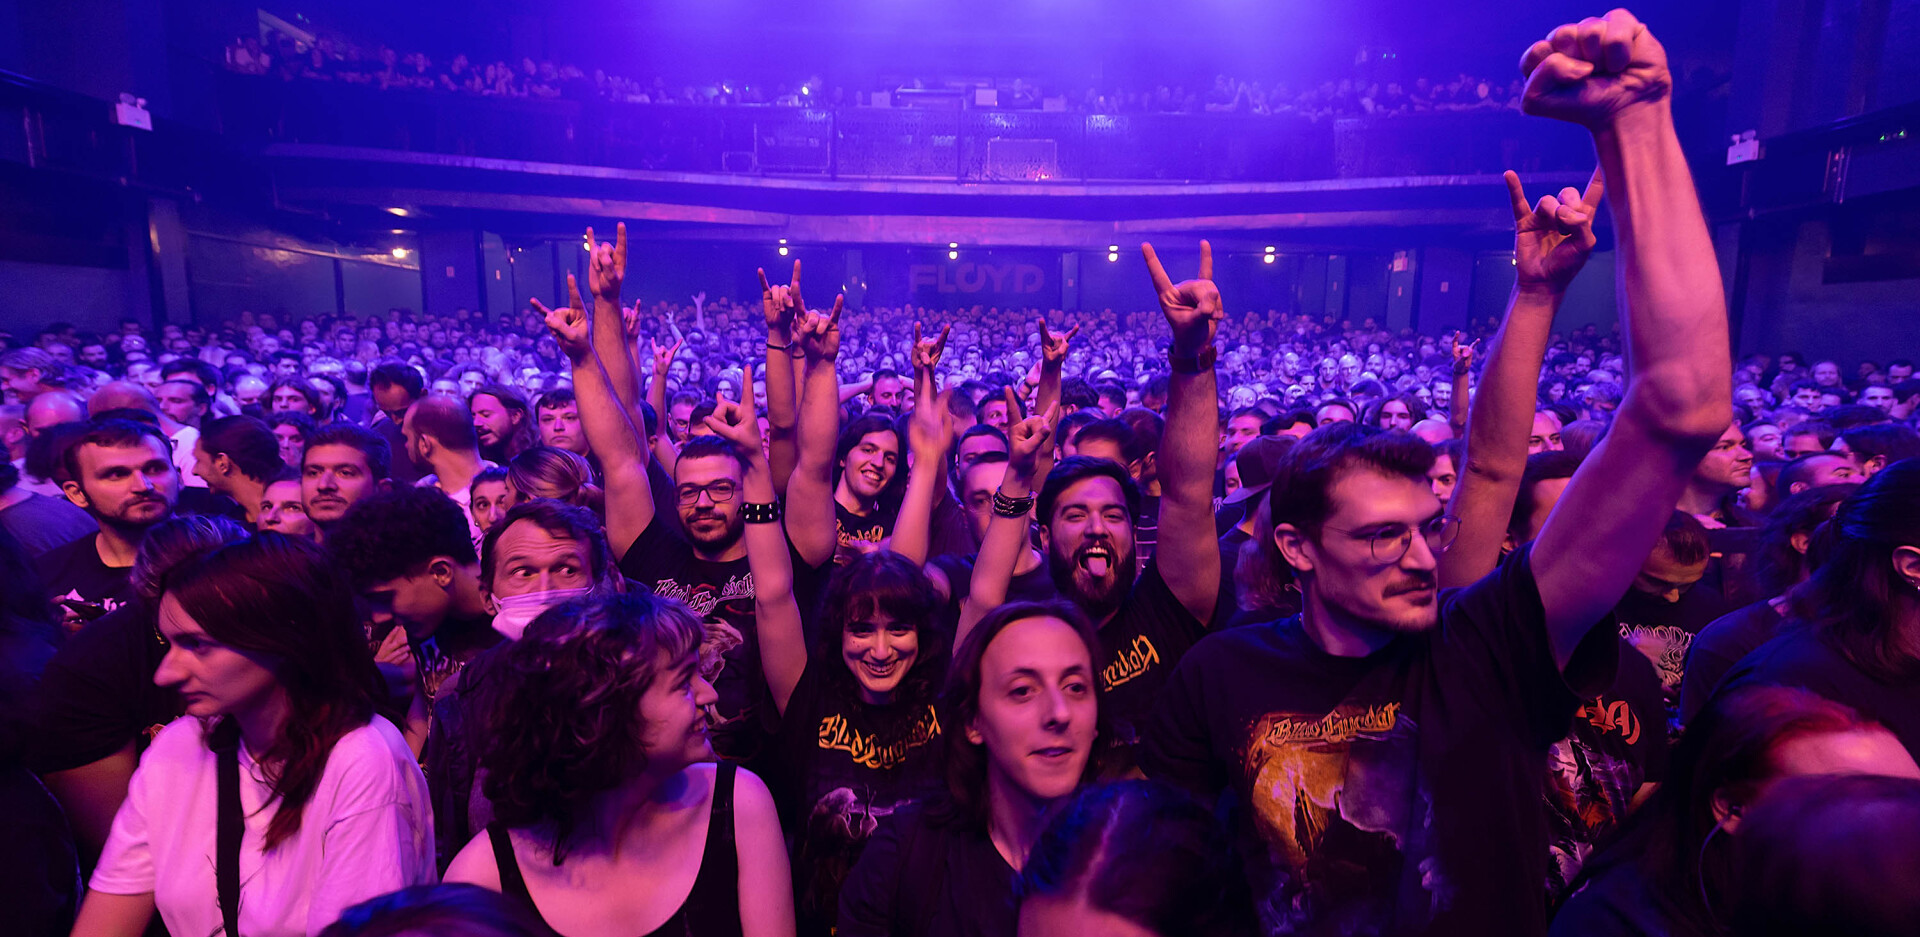 Blind Guardian στο Floyd: Φωτορεπορτάζ από τη sold out συναυλία του γερμανικού metal συγκροτήματος στις 6 Οκτωβρίου, στον νέο συναυλιακό χώρο της Αθήνας.